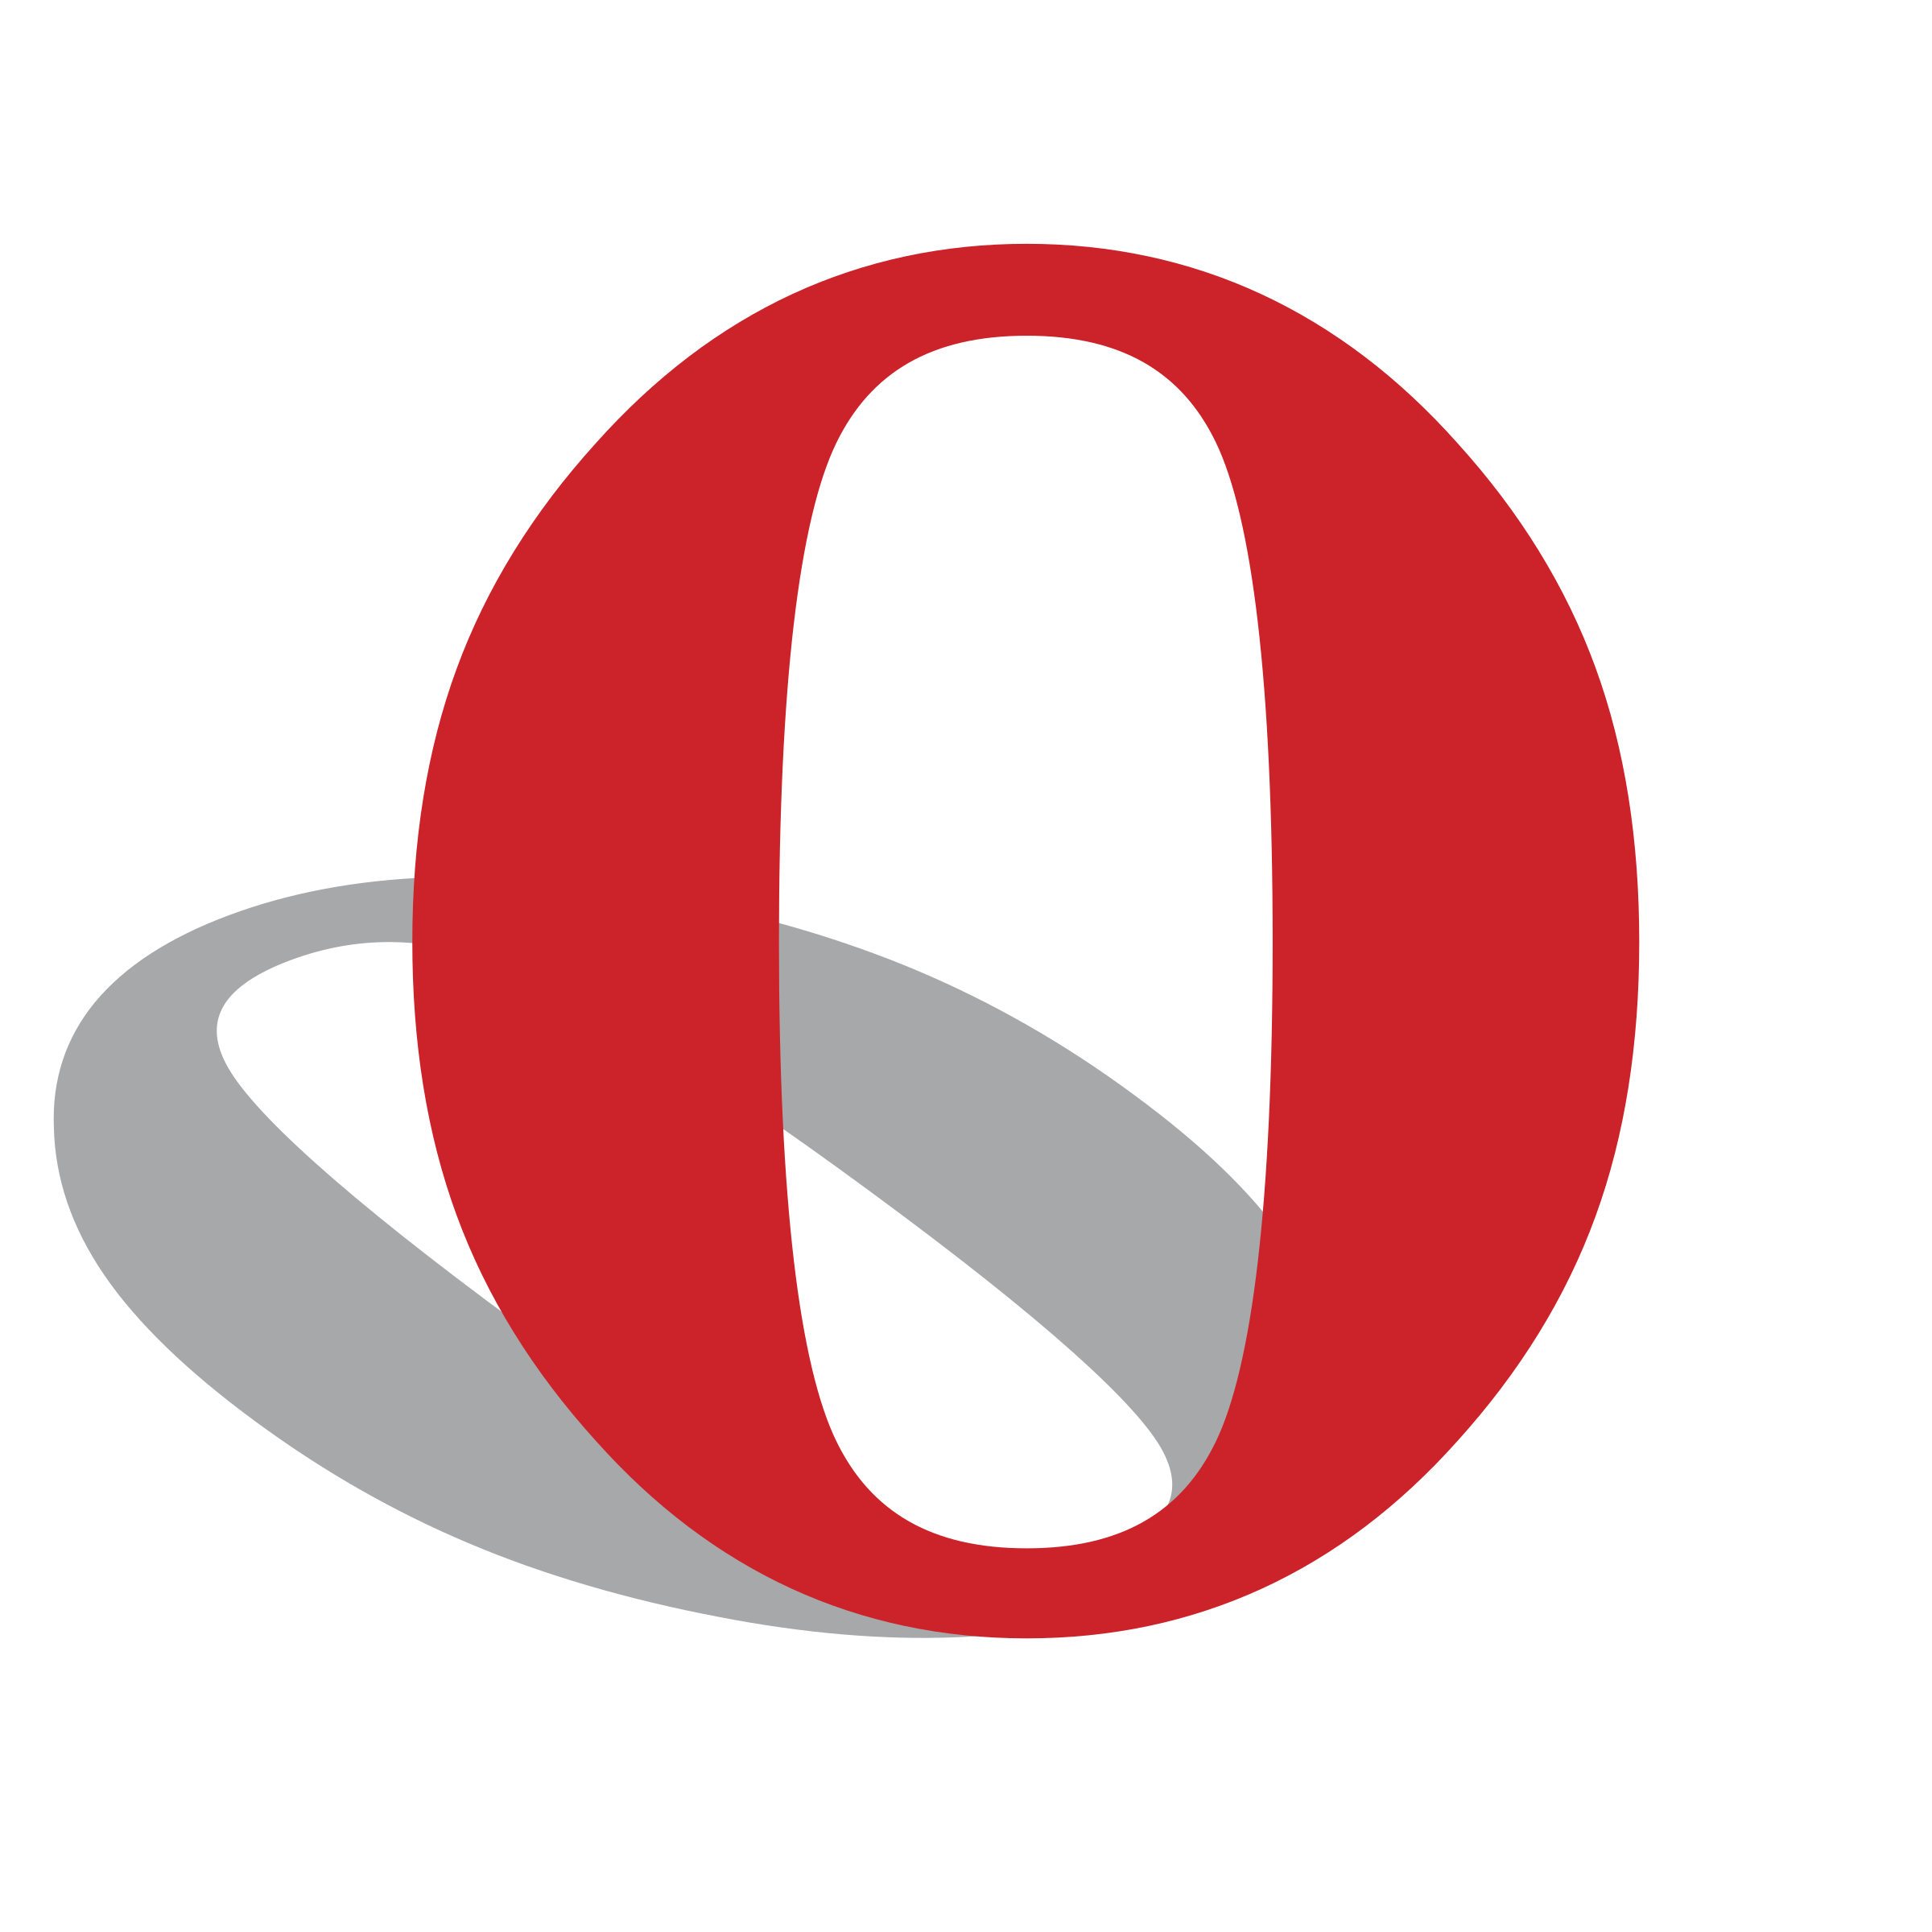 Opera Logos - Opera Brand